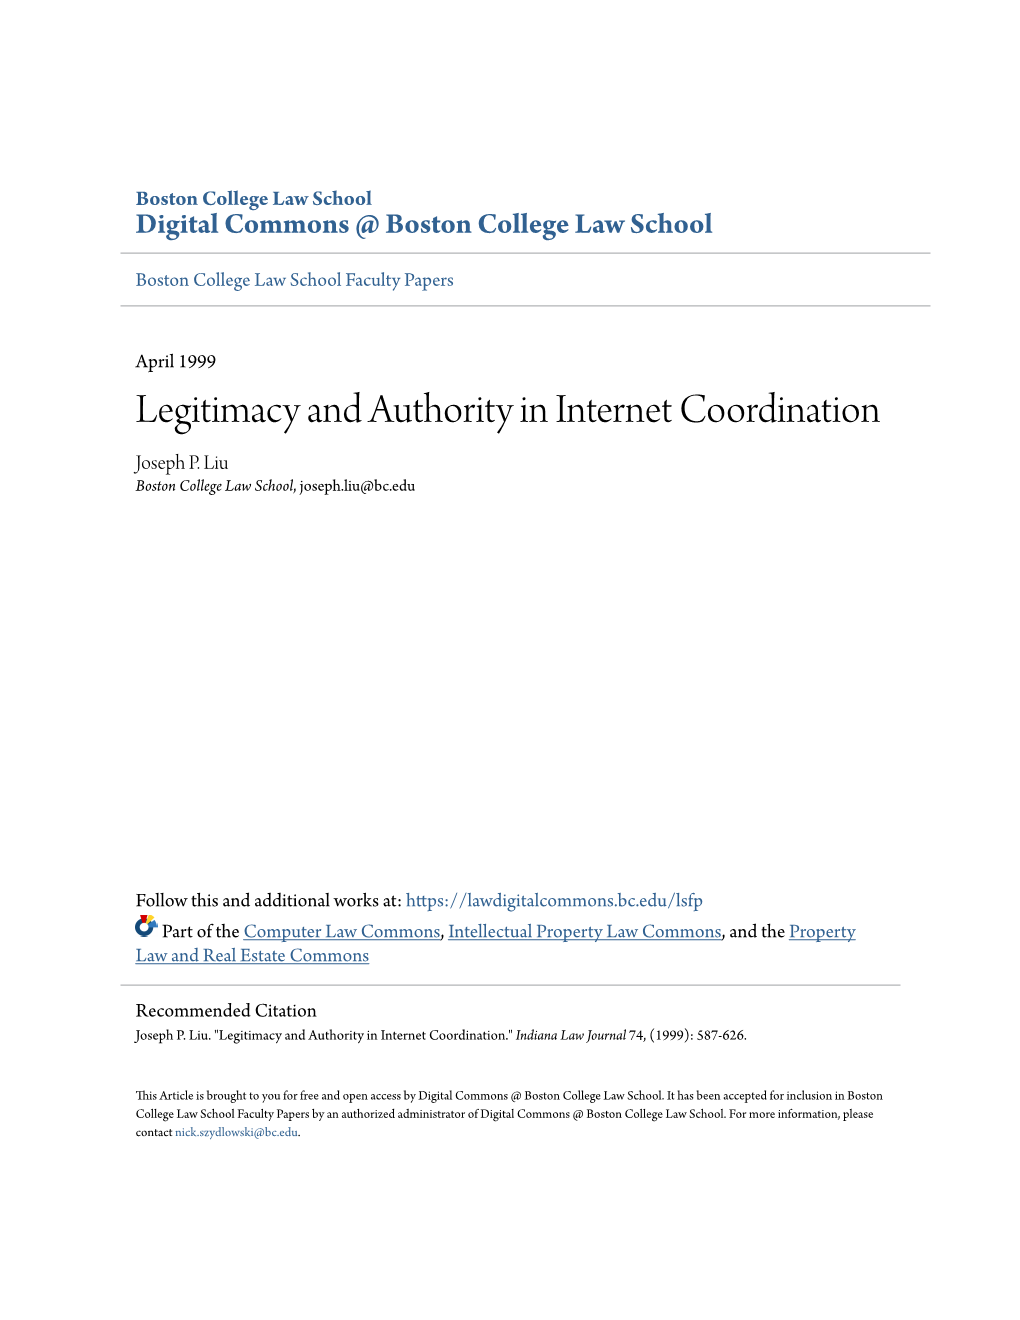 Legitimacy and Authority in Internet Coordination Joseph P